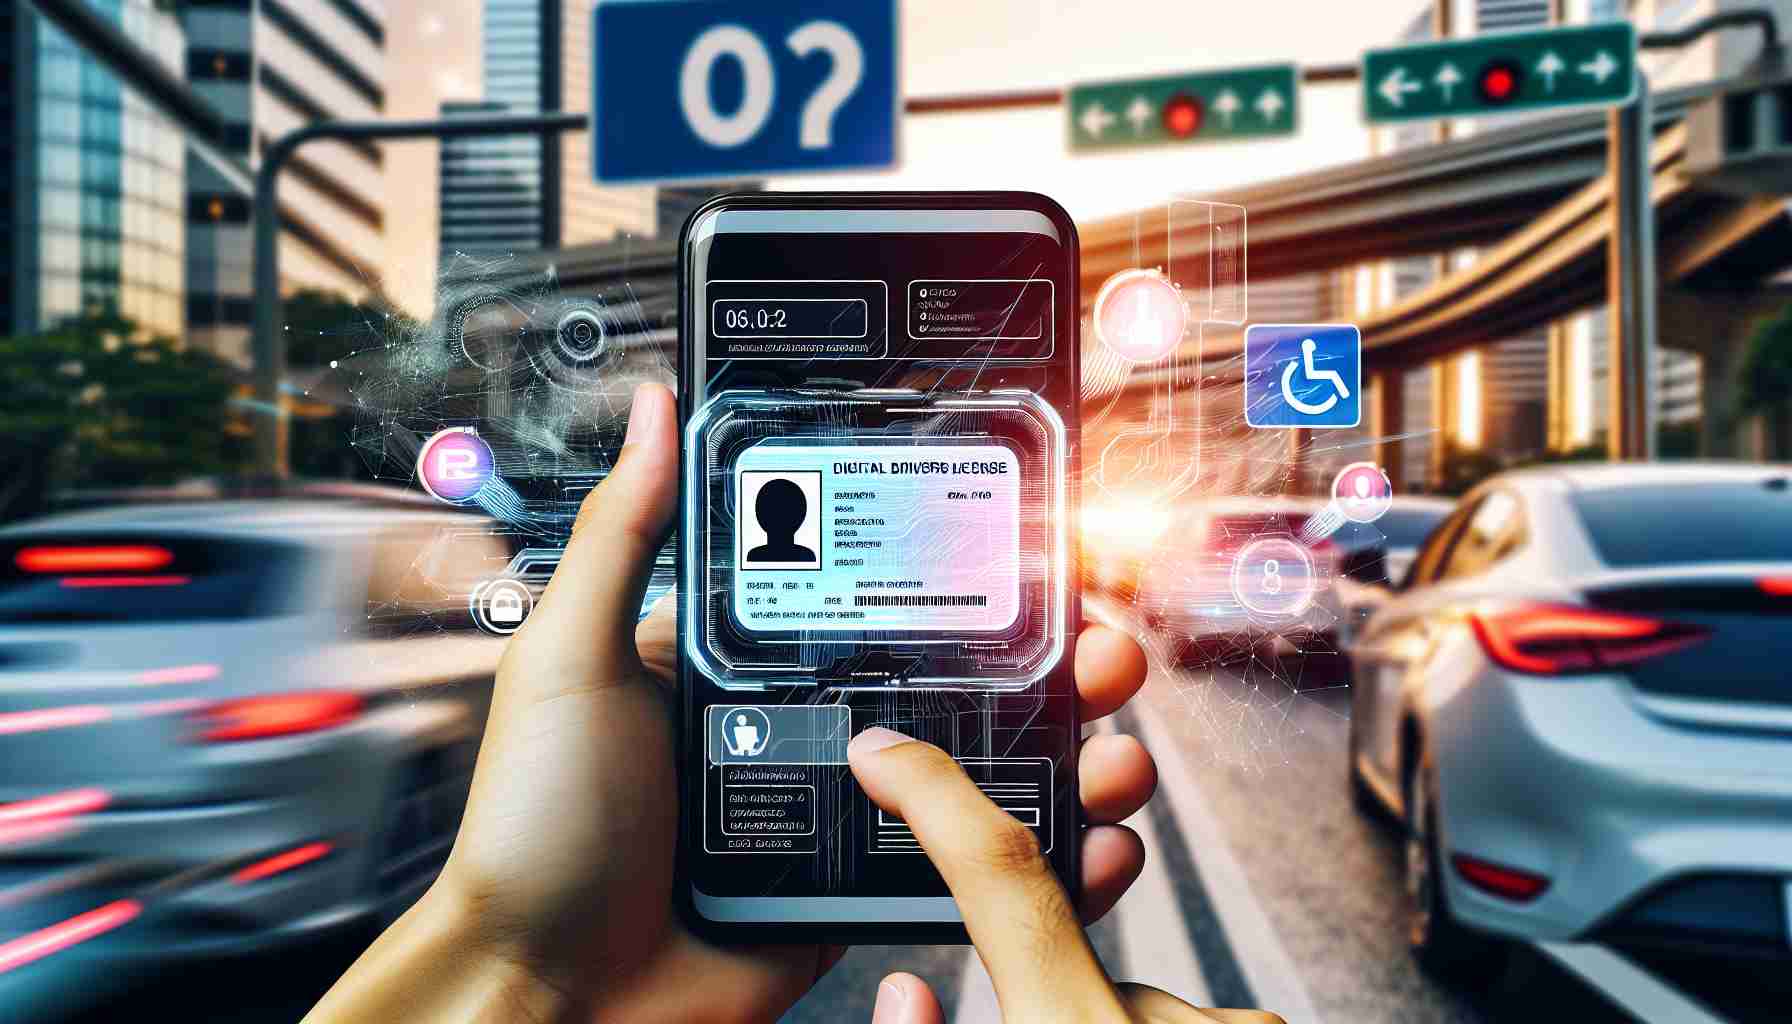 Brazil Advances with Digital Driver’s License Adoption